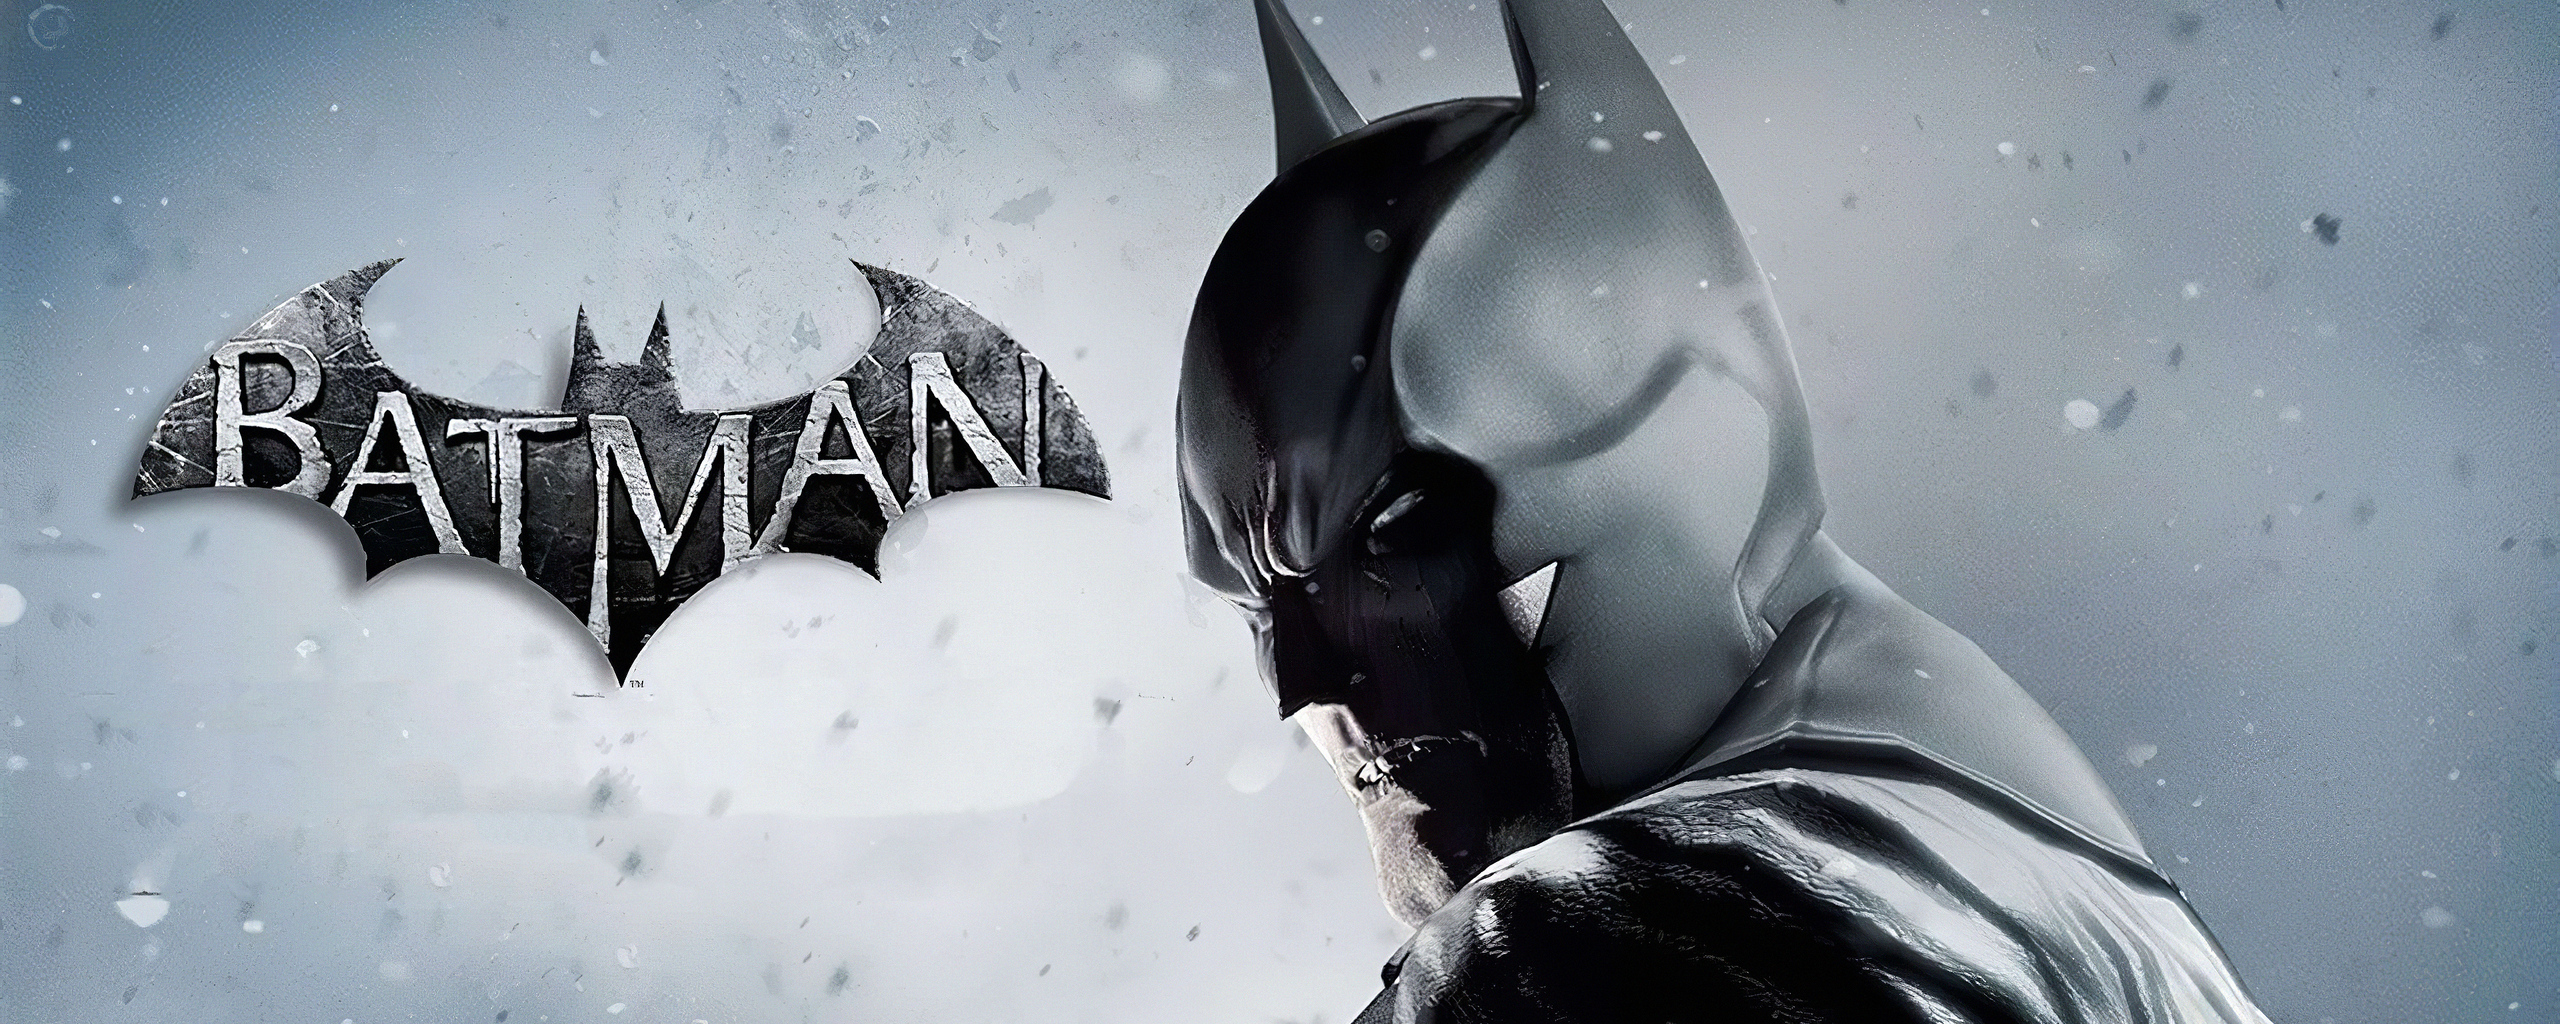 Batman Arkham Origins Бэтмен. Batman™: Arkham Origins Blackgate - Deluxe Edition.